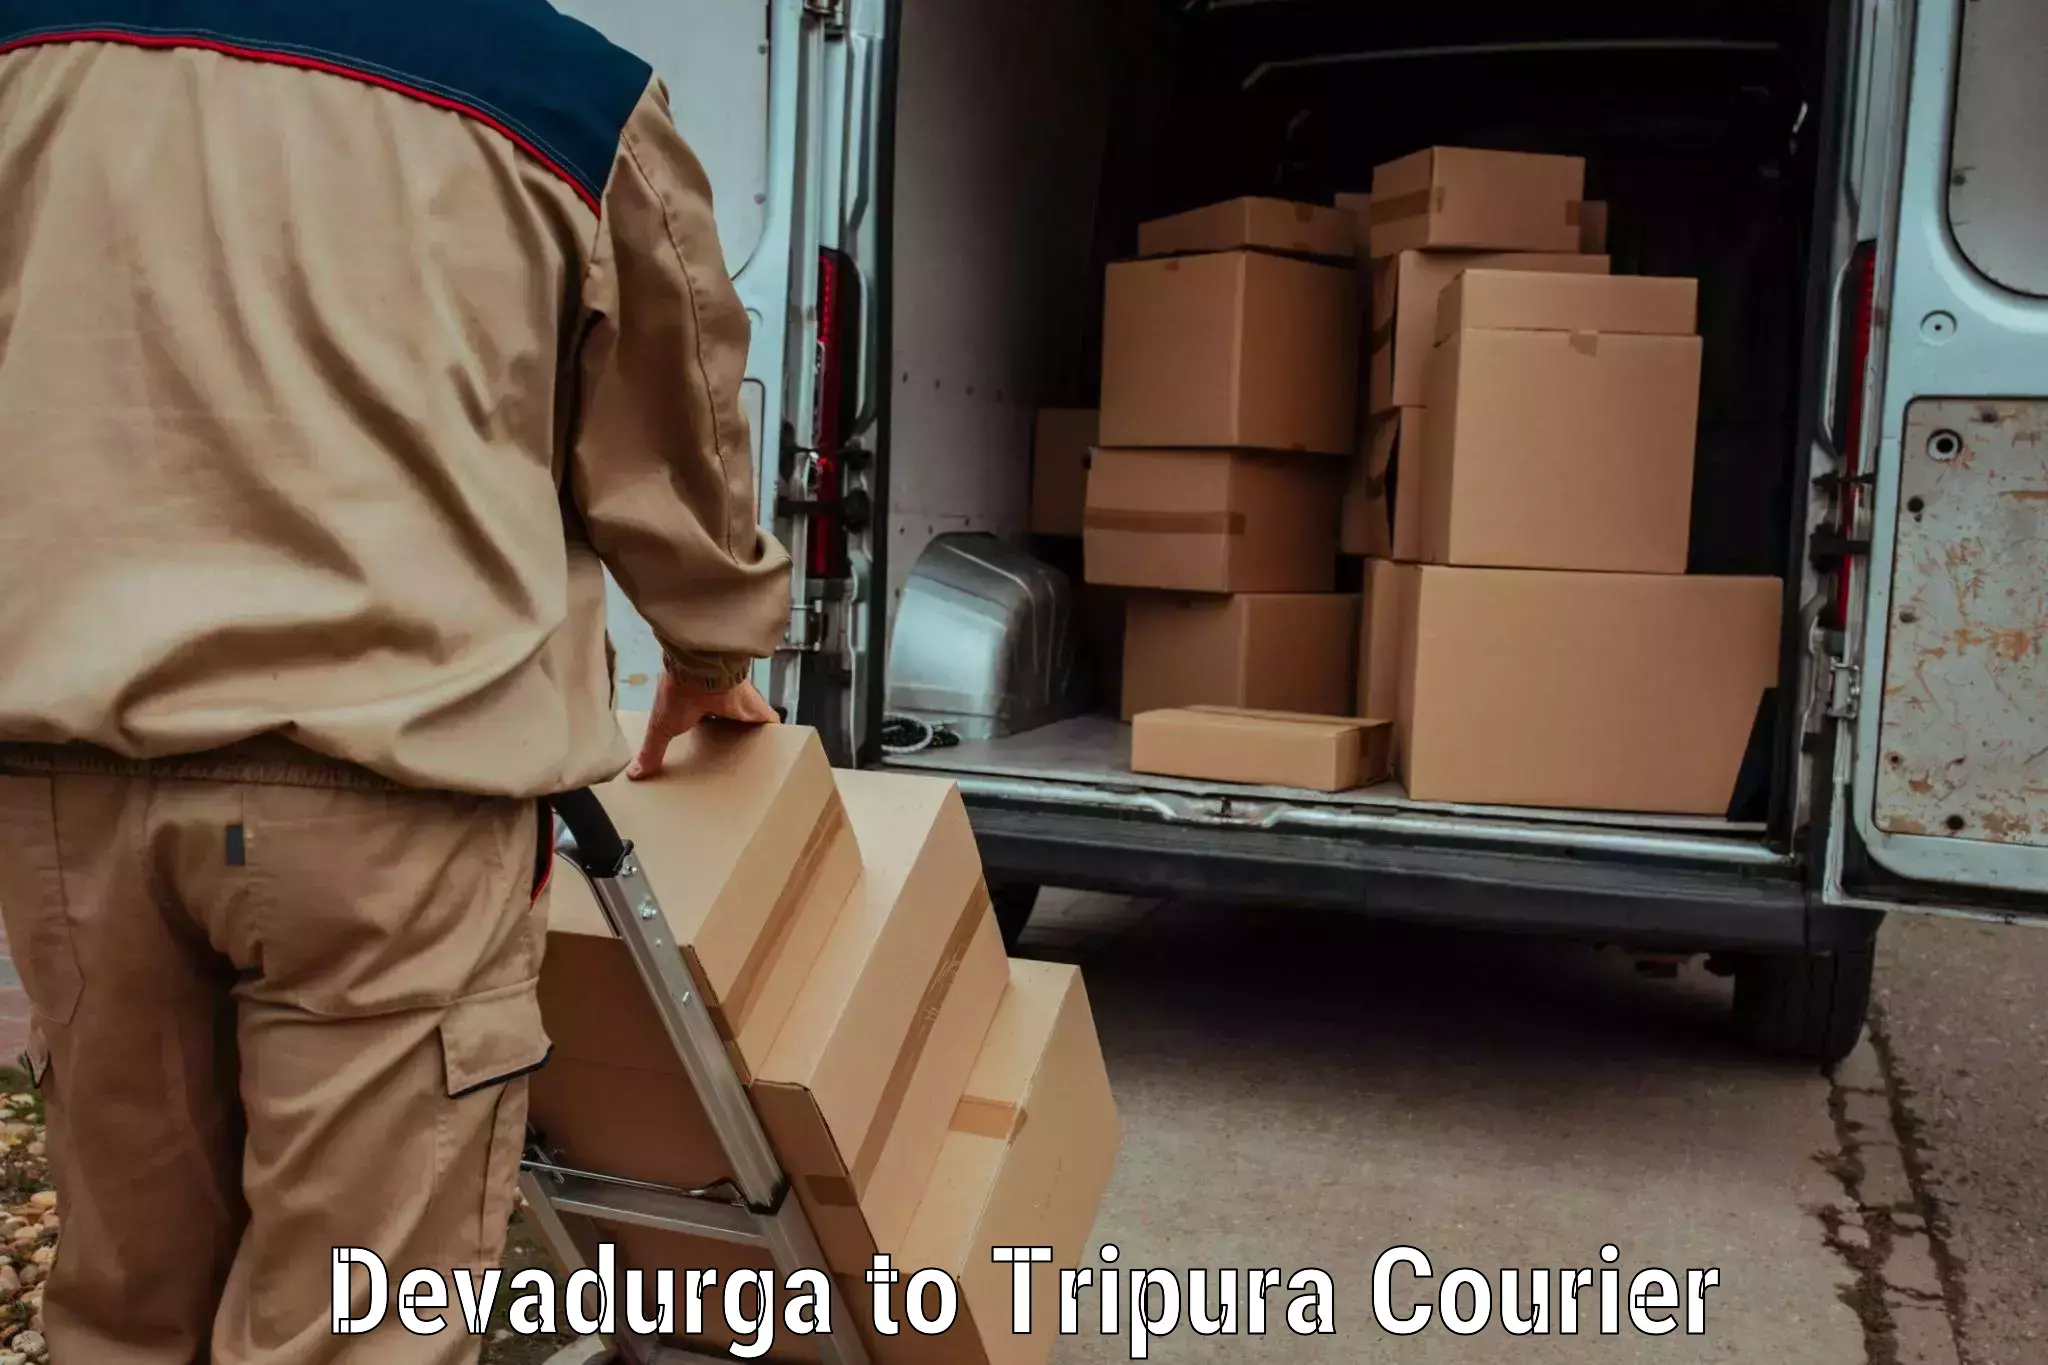 Express package delivery Devadurga to Udaipur Tripura